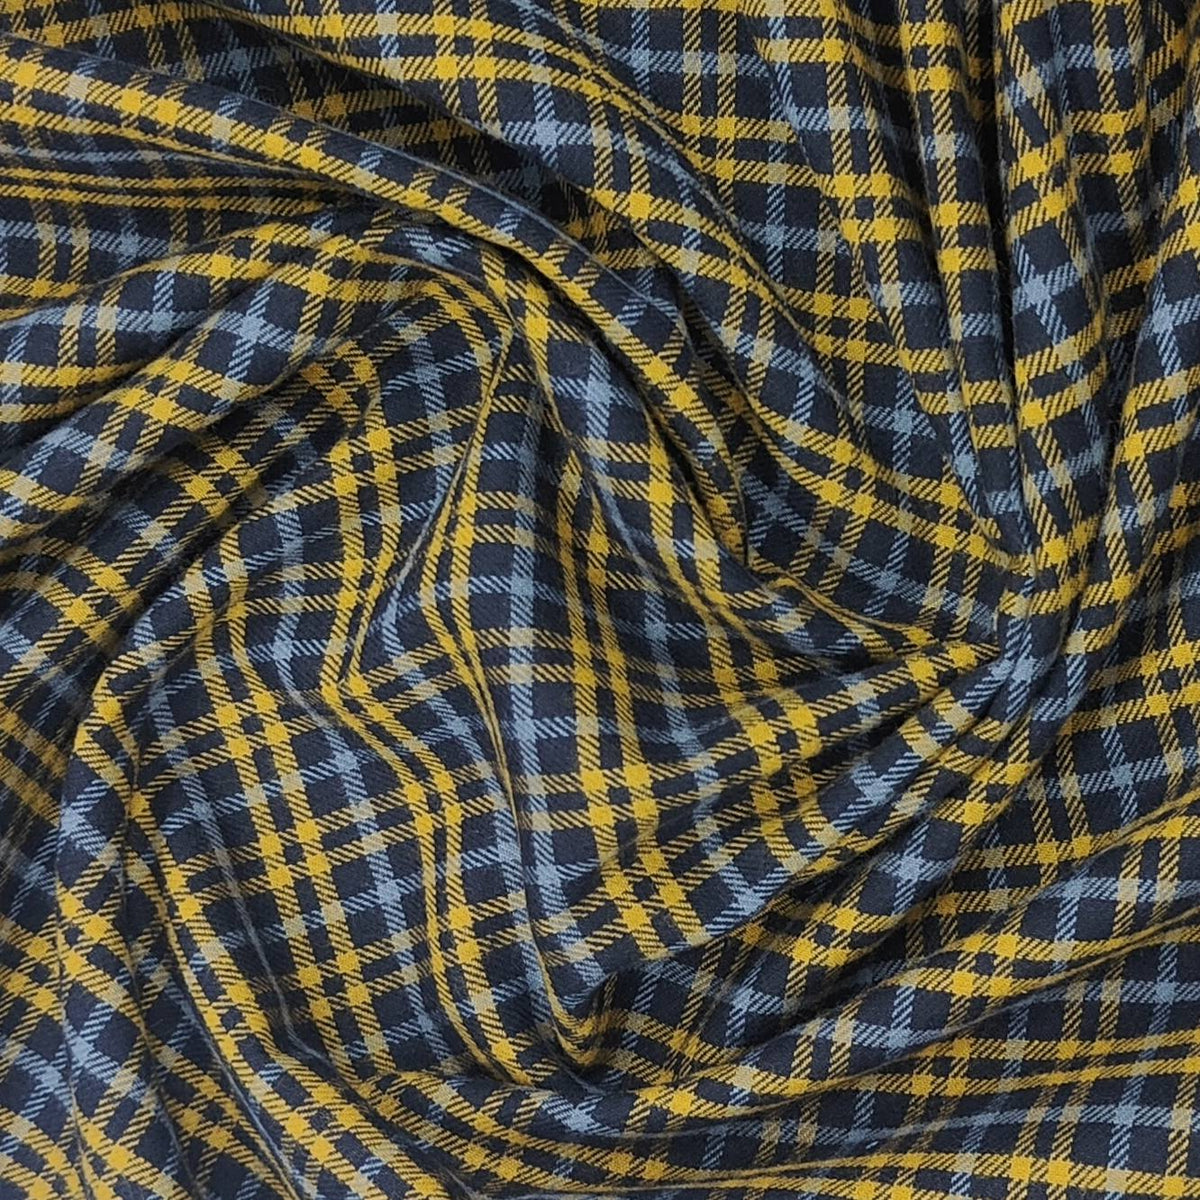 Raymond Cots Wool Checks Warm Shirt Fabric Colour Yellow Black